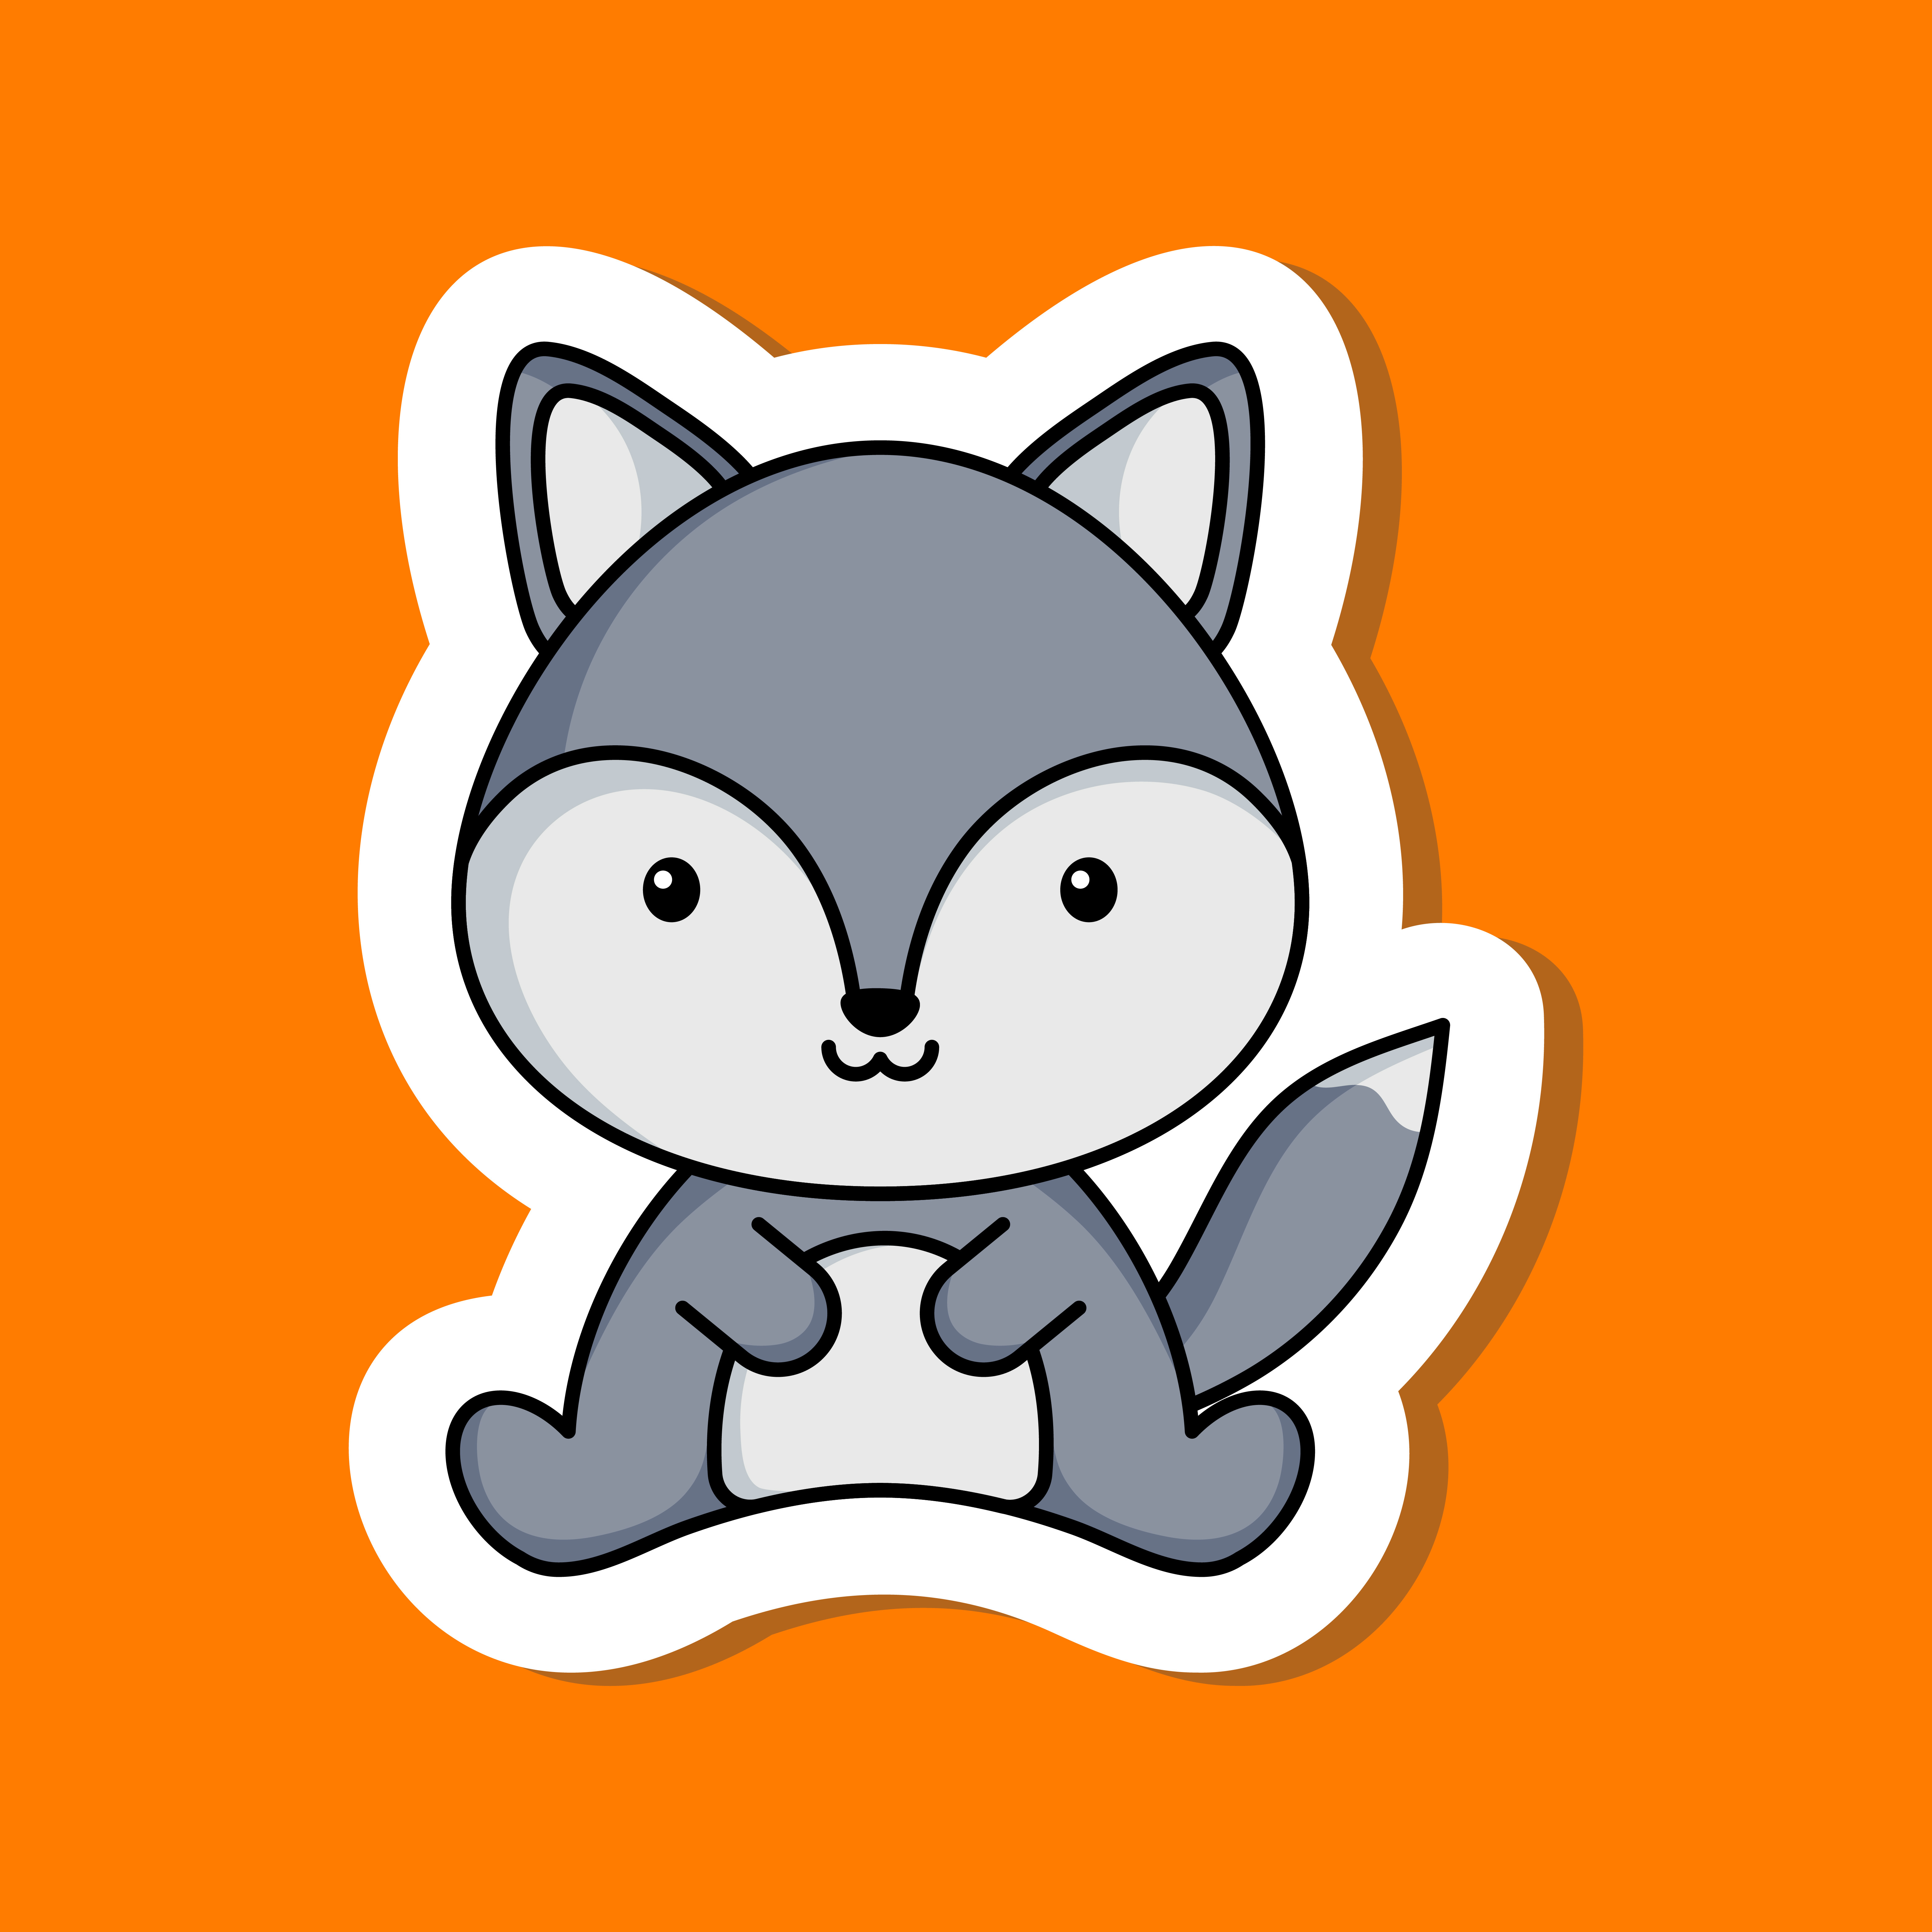 Cute cartoon sticker little wolf logo template. Mascot animal character design of album, scrapbook, greeting card, invitation, flyer, sticker, card. Vector stock illustration.